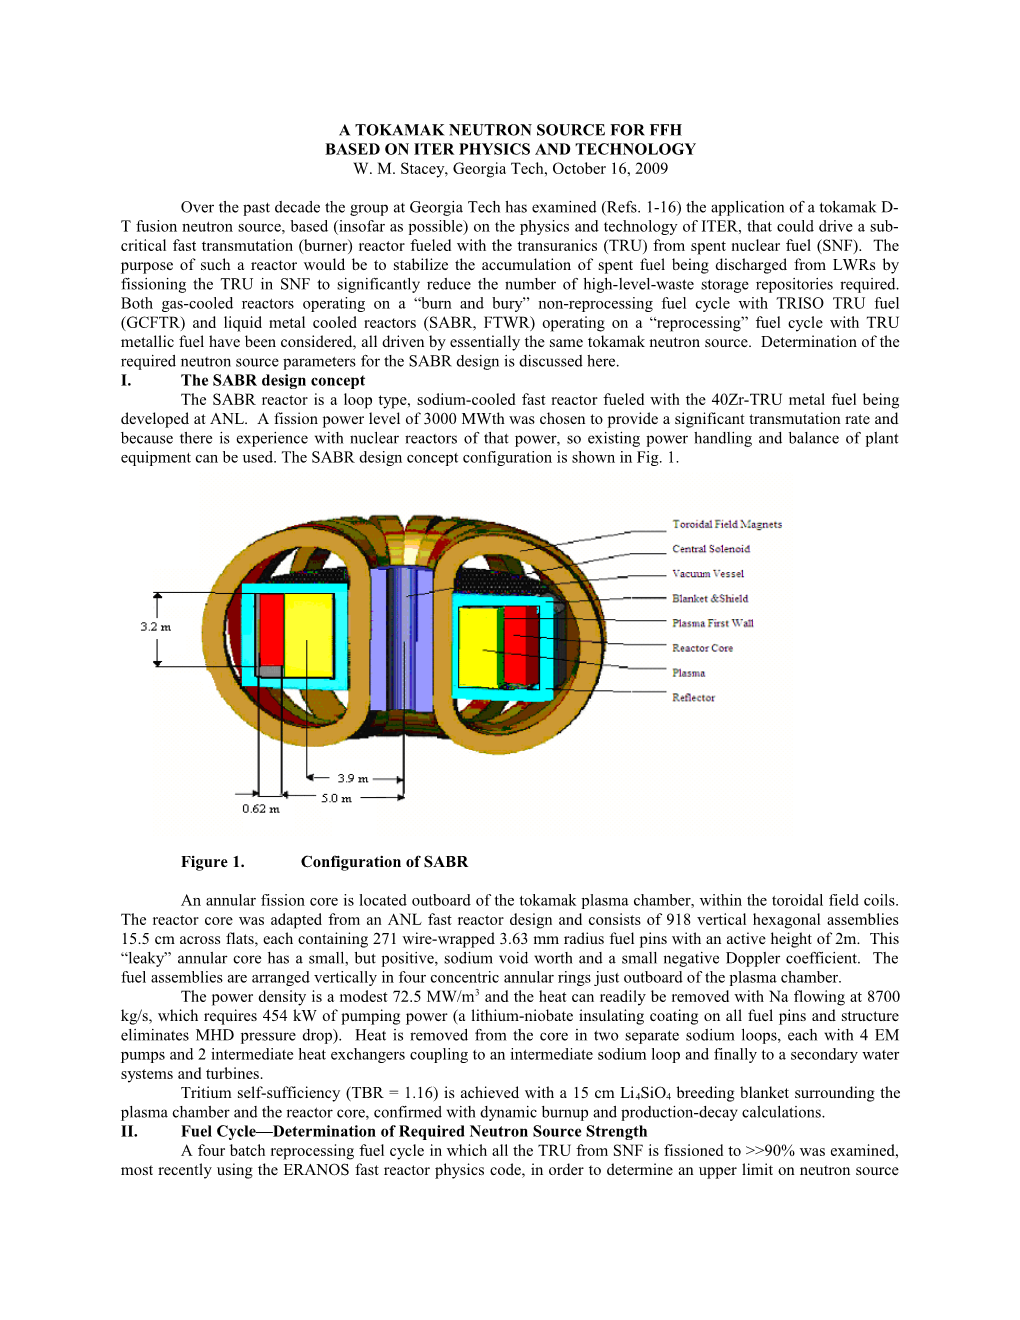 A Tokamak Neutron Source for Hybrids